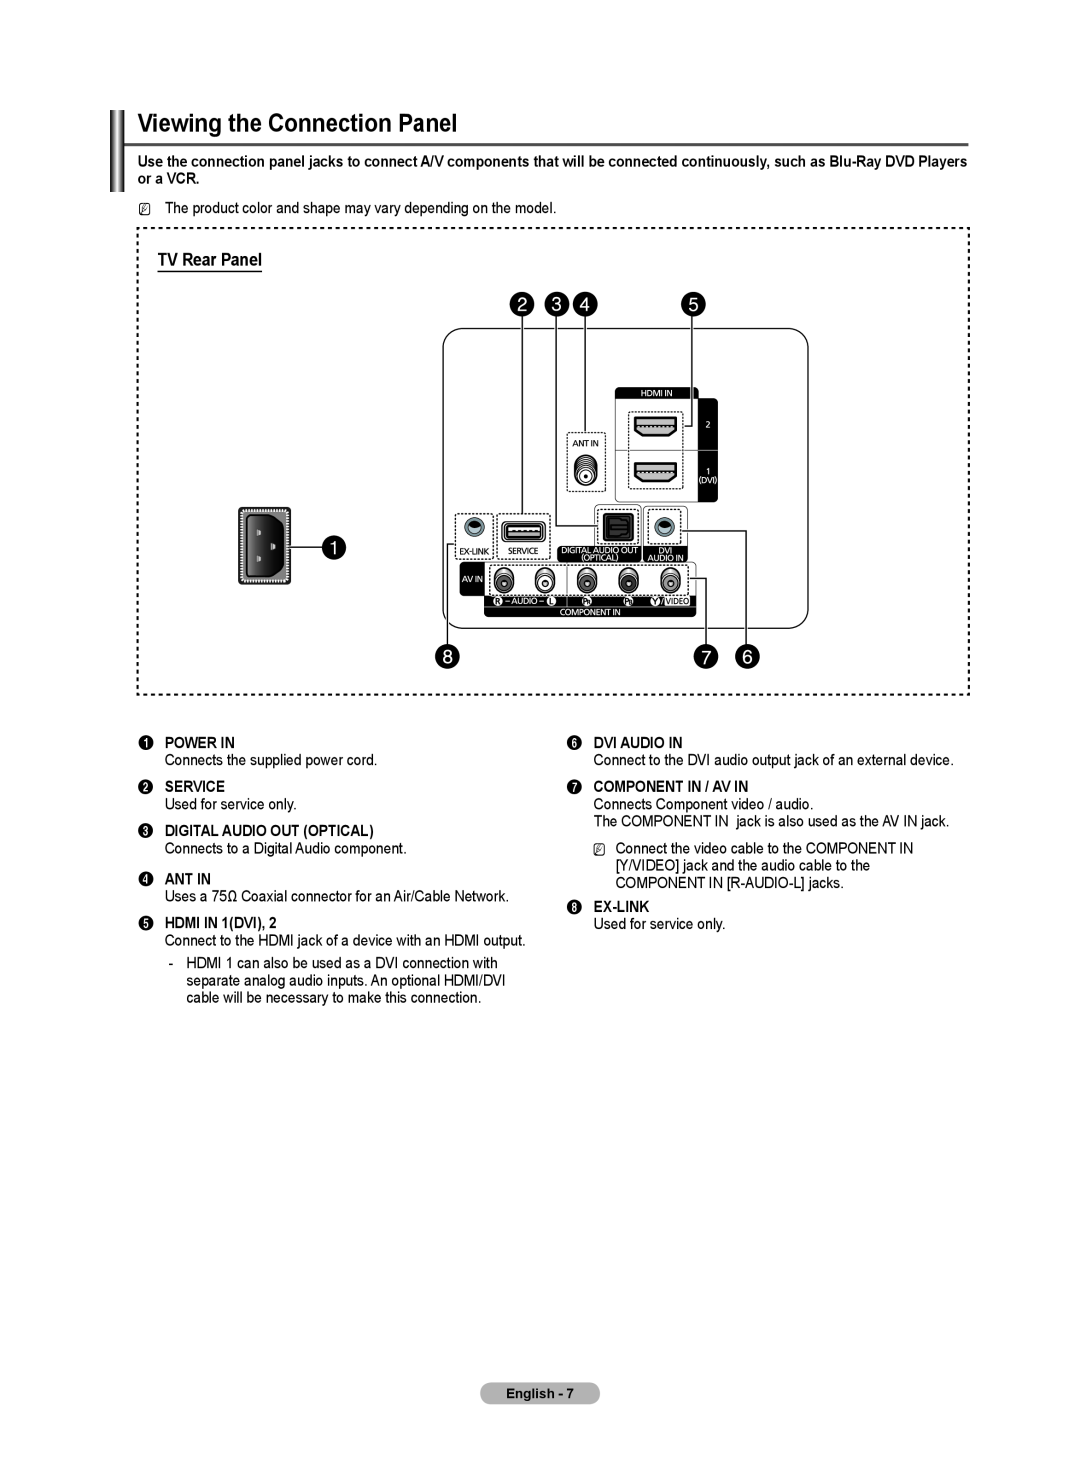 Samsung BN68-02426A-00 user manual TV Rear Panel, Power In, Service, Ant In, HDMI IN 1DVI, Dvi Audio In, Ex-Link 